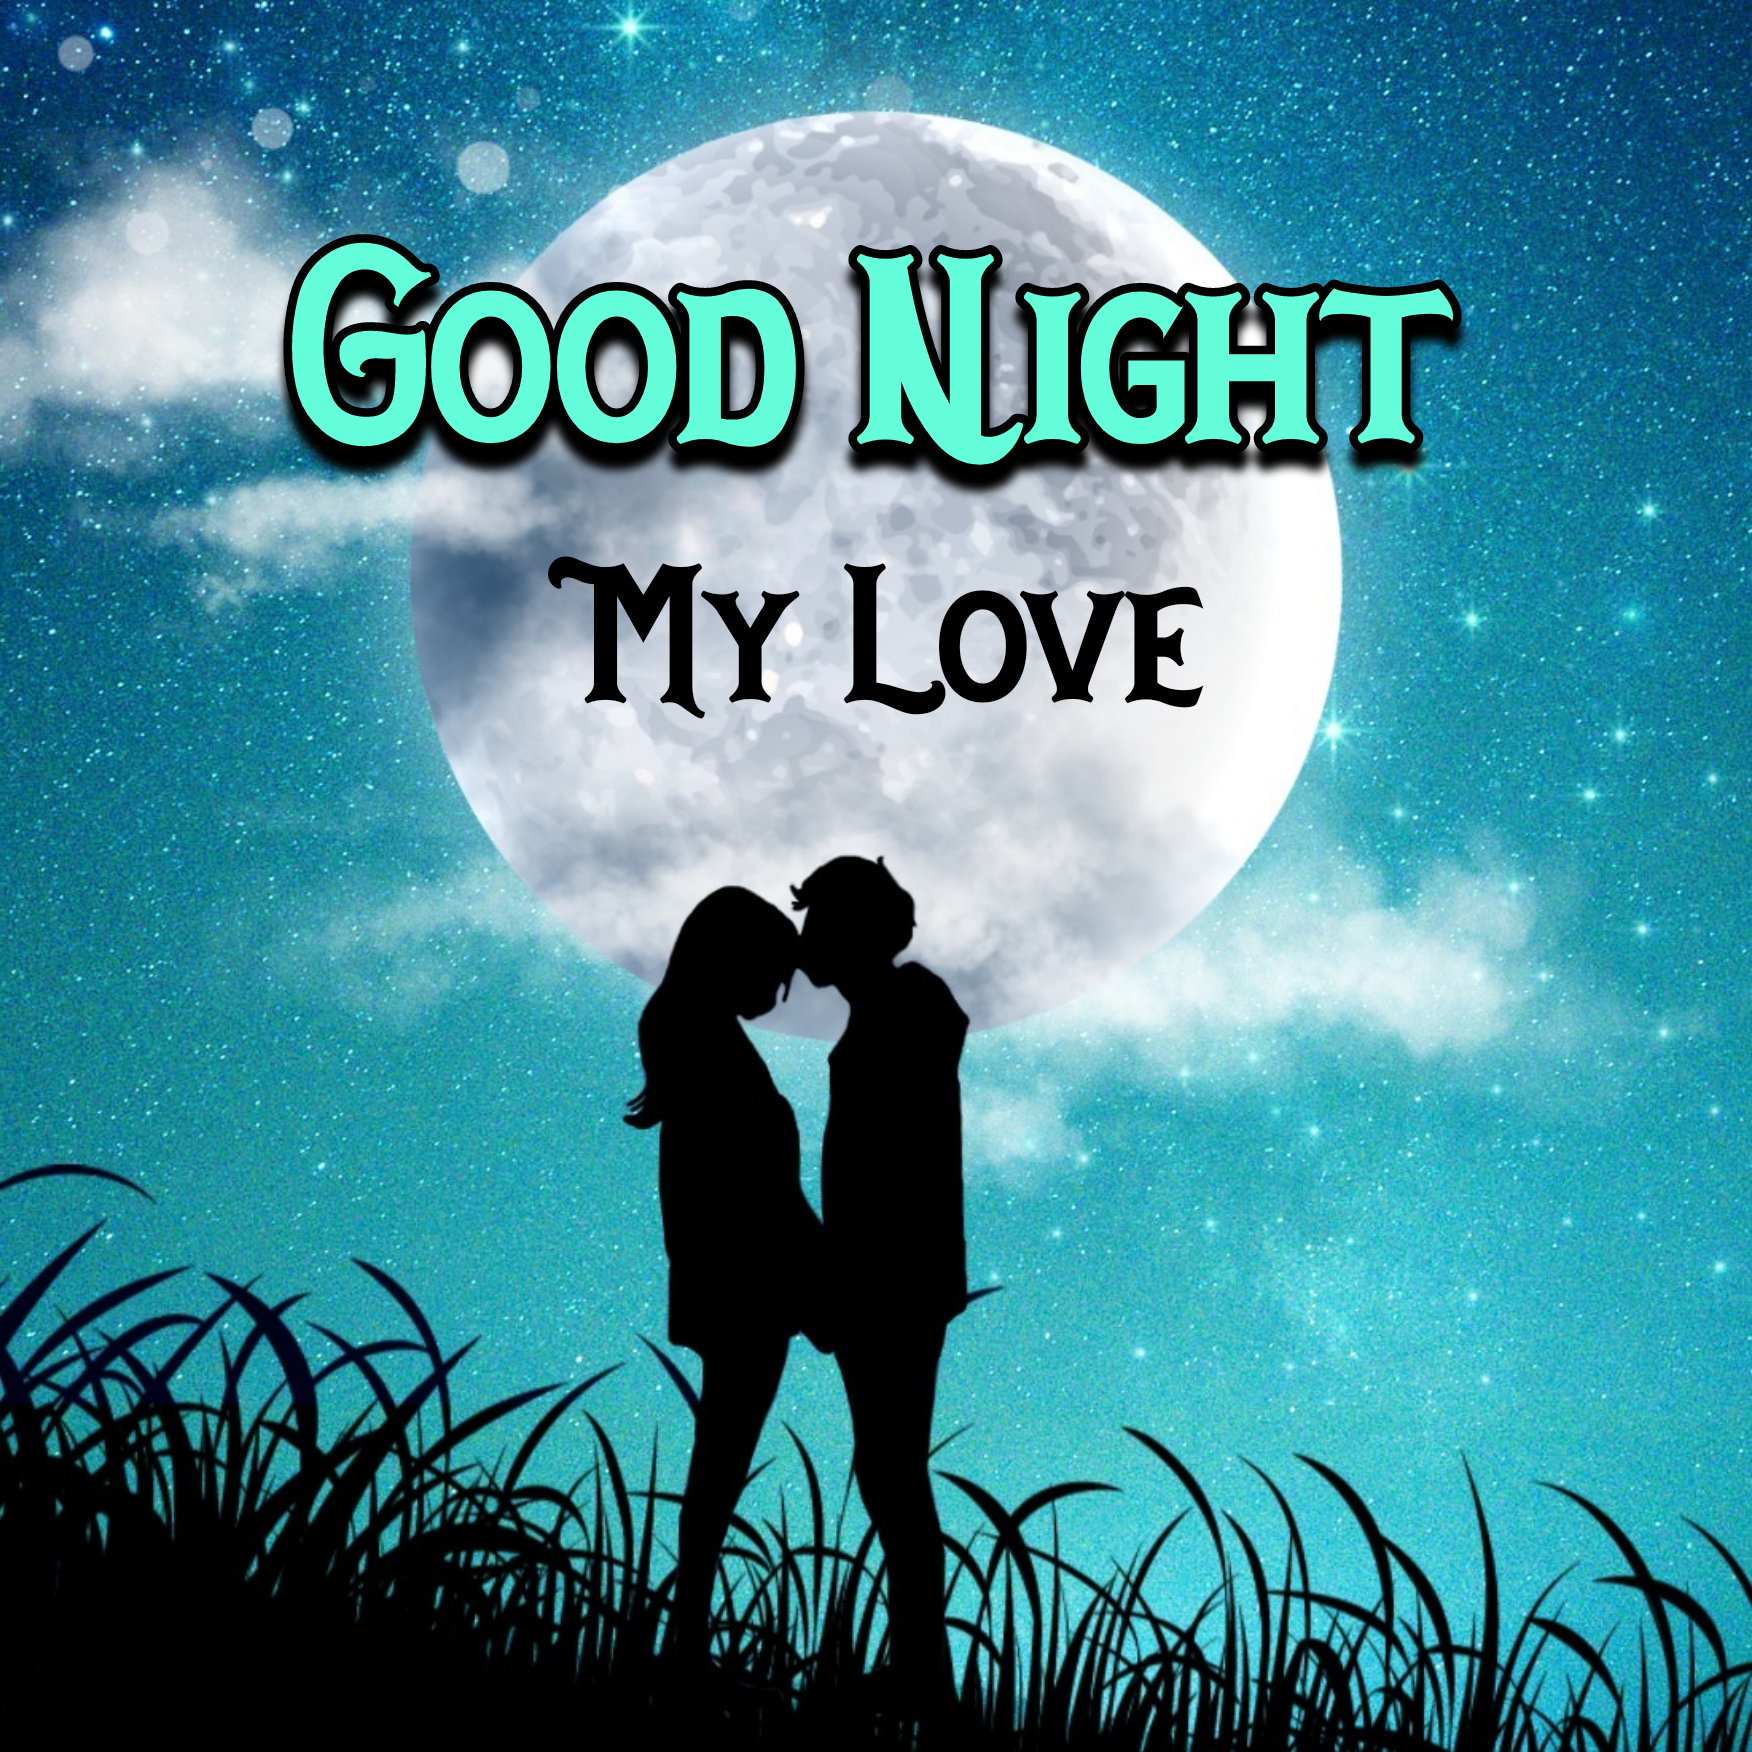 Couple Romantic Good Night Images